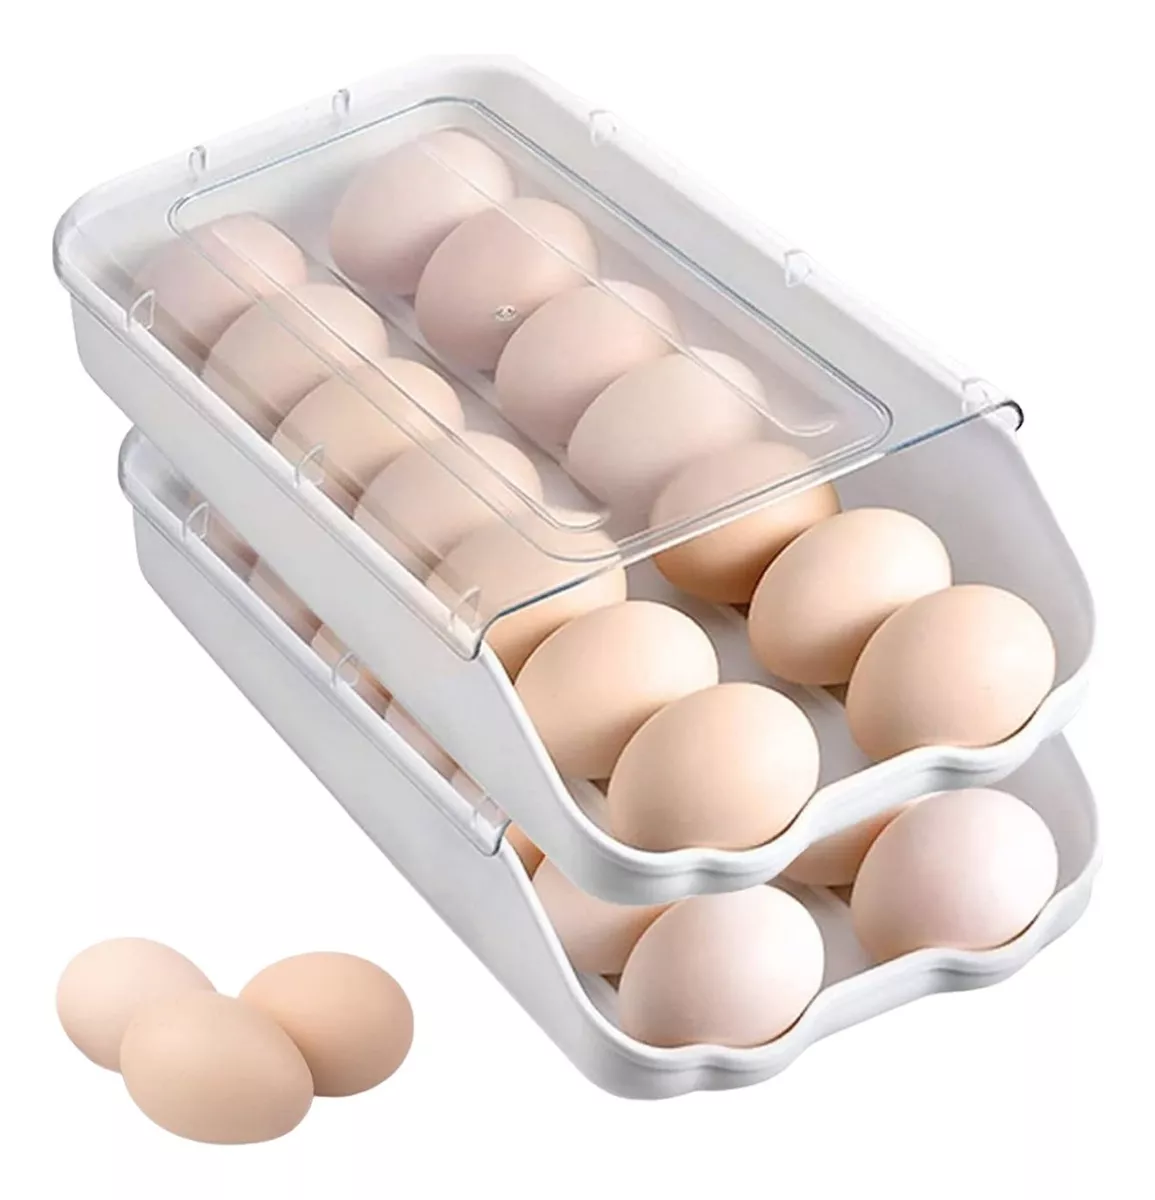 Tercera imagen para búsqueda de porta huevos